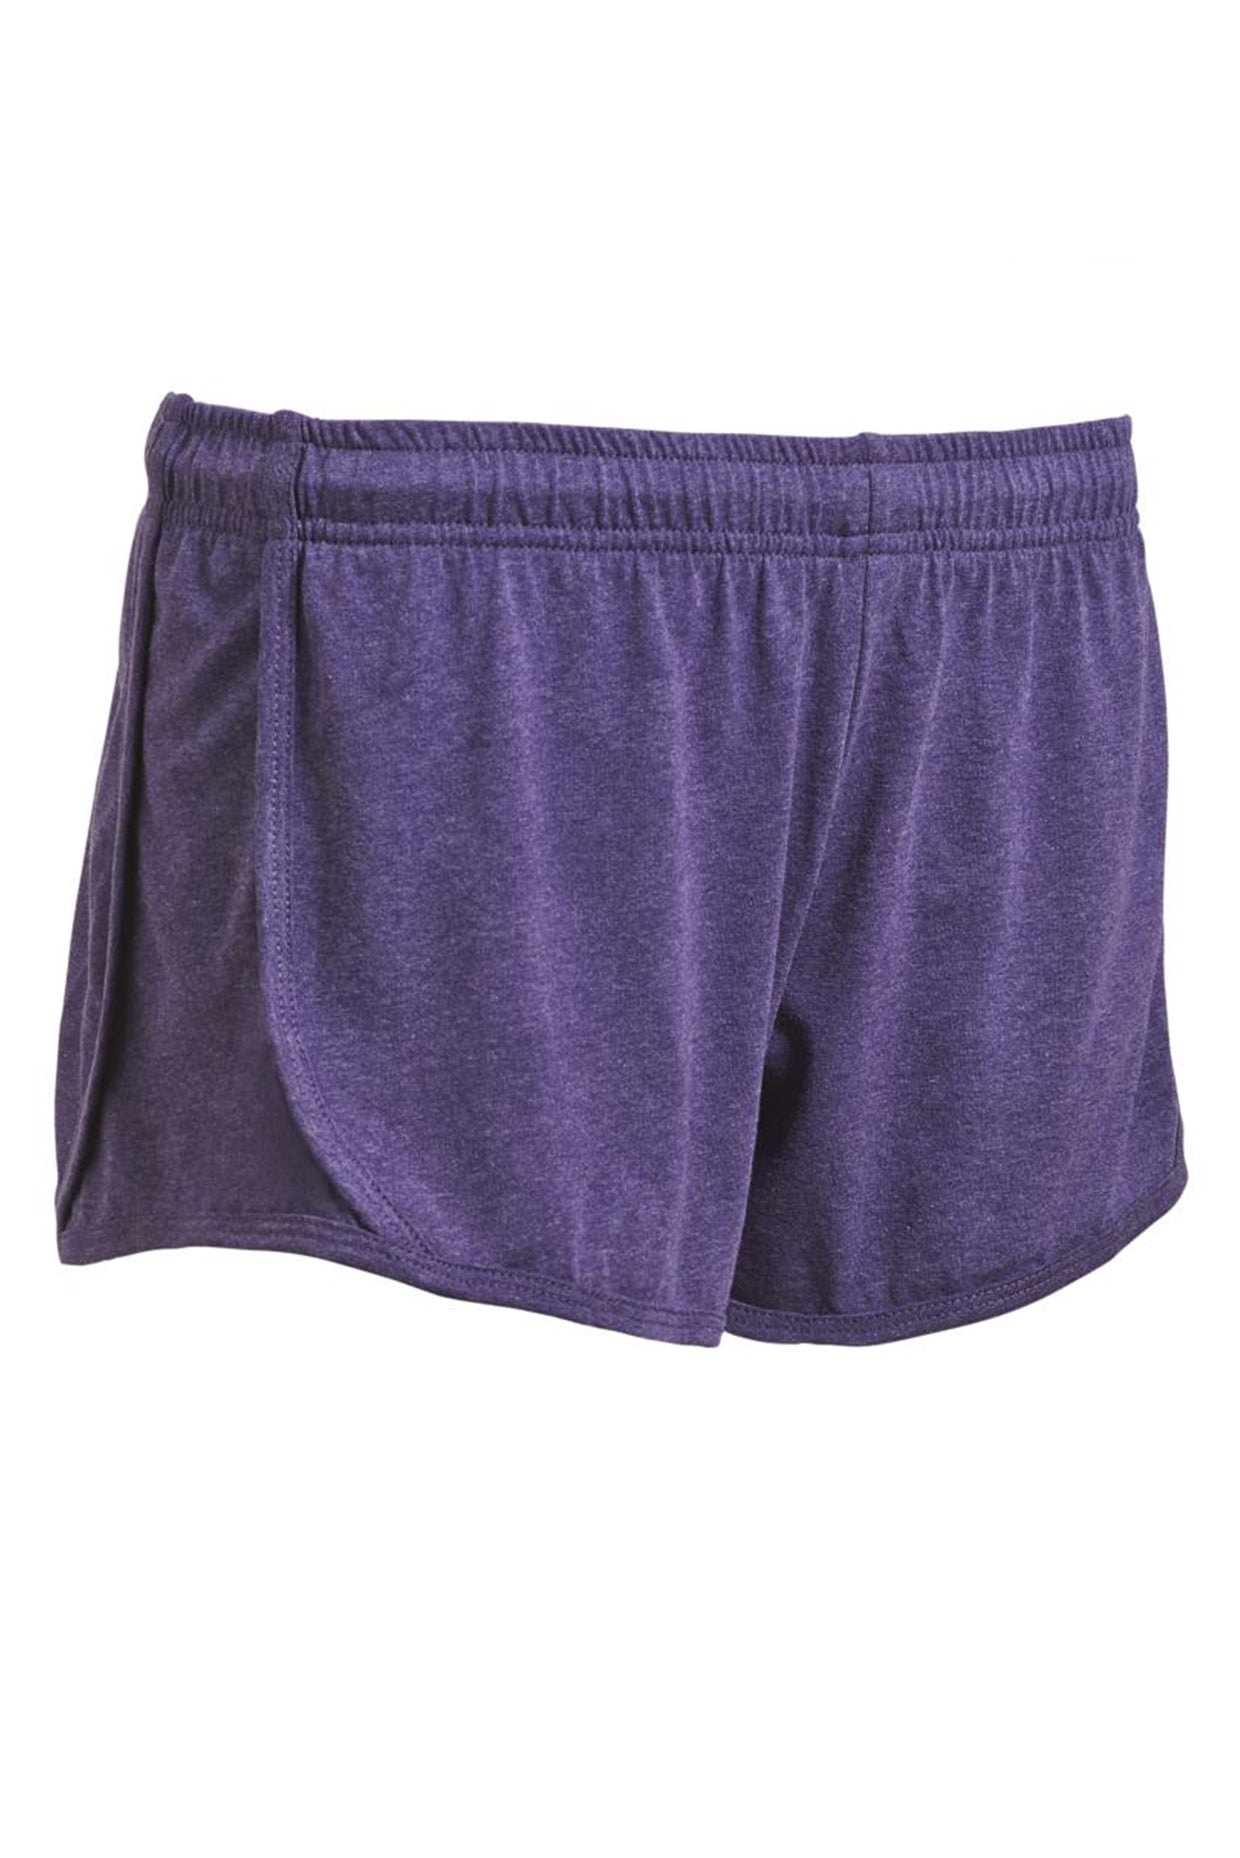 Performance Heather Epic Shorts 🇺🇸 - Expert Brand Apparel#color_dark-heather-purple